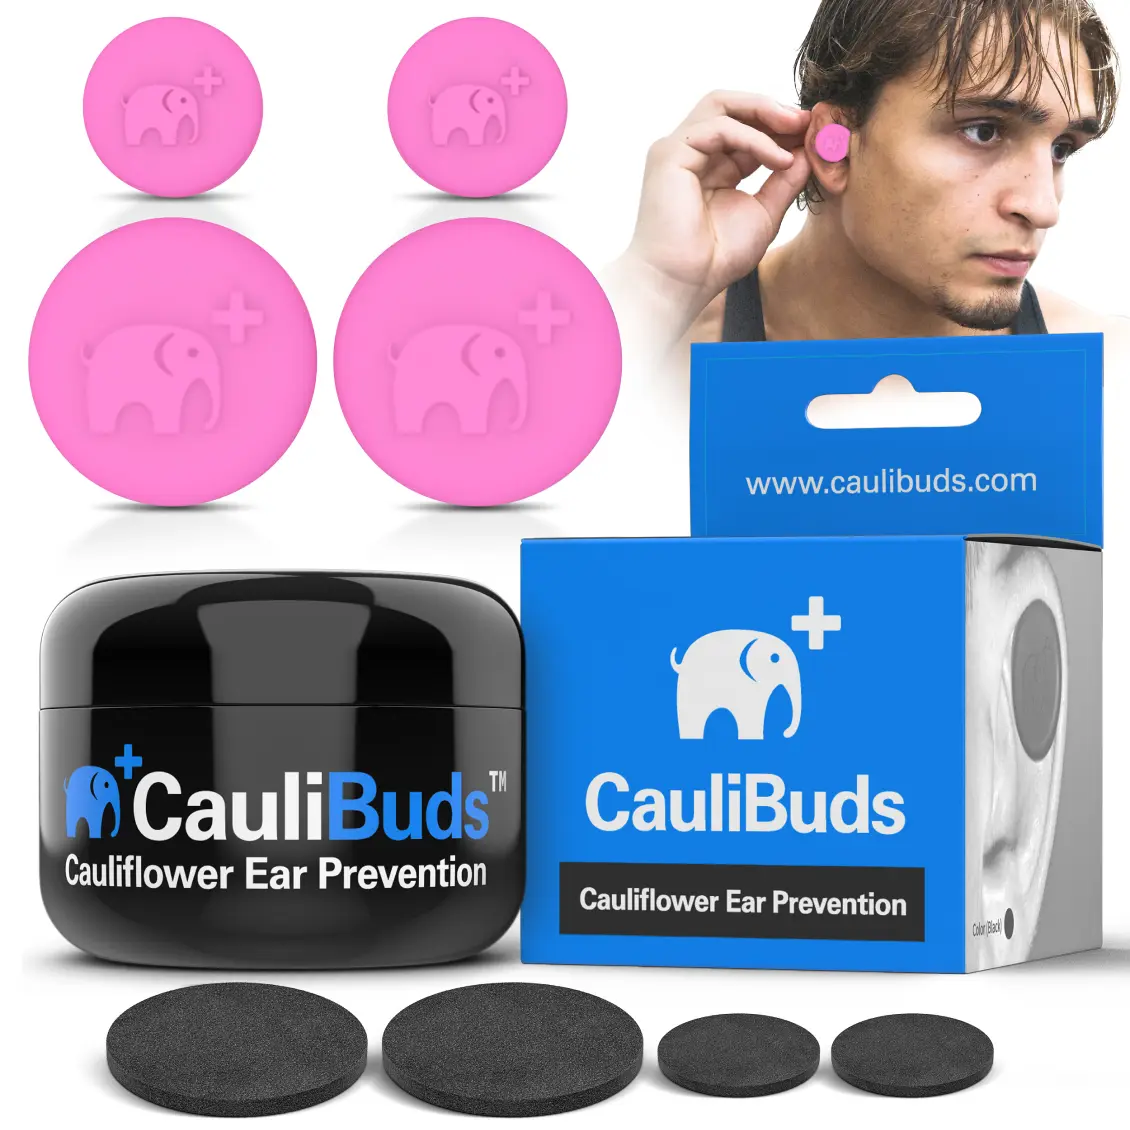 CauliBuds Cauliflower Ear Prevention Kit